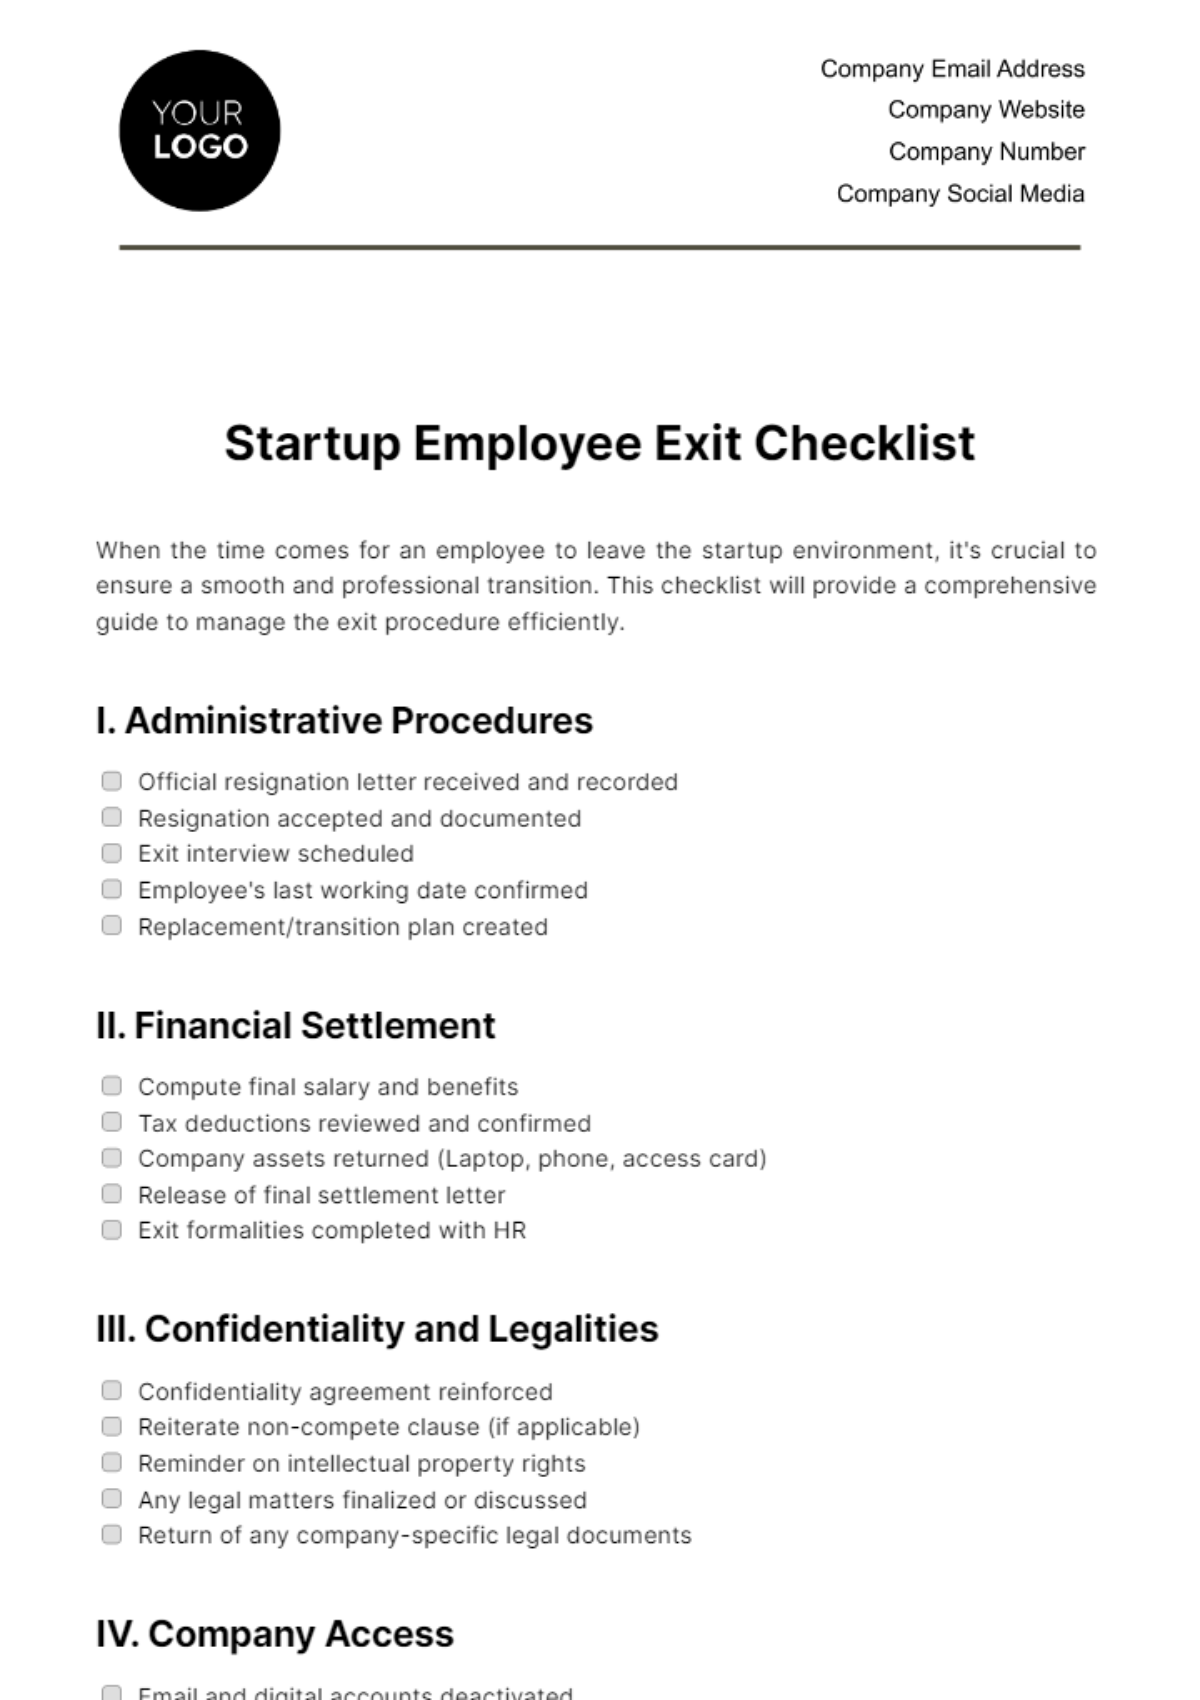 Startup Employee Exit Checklist Template